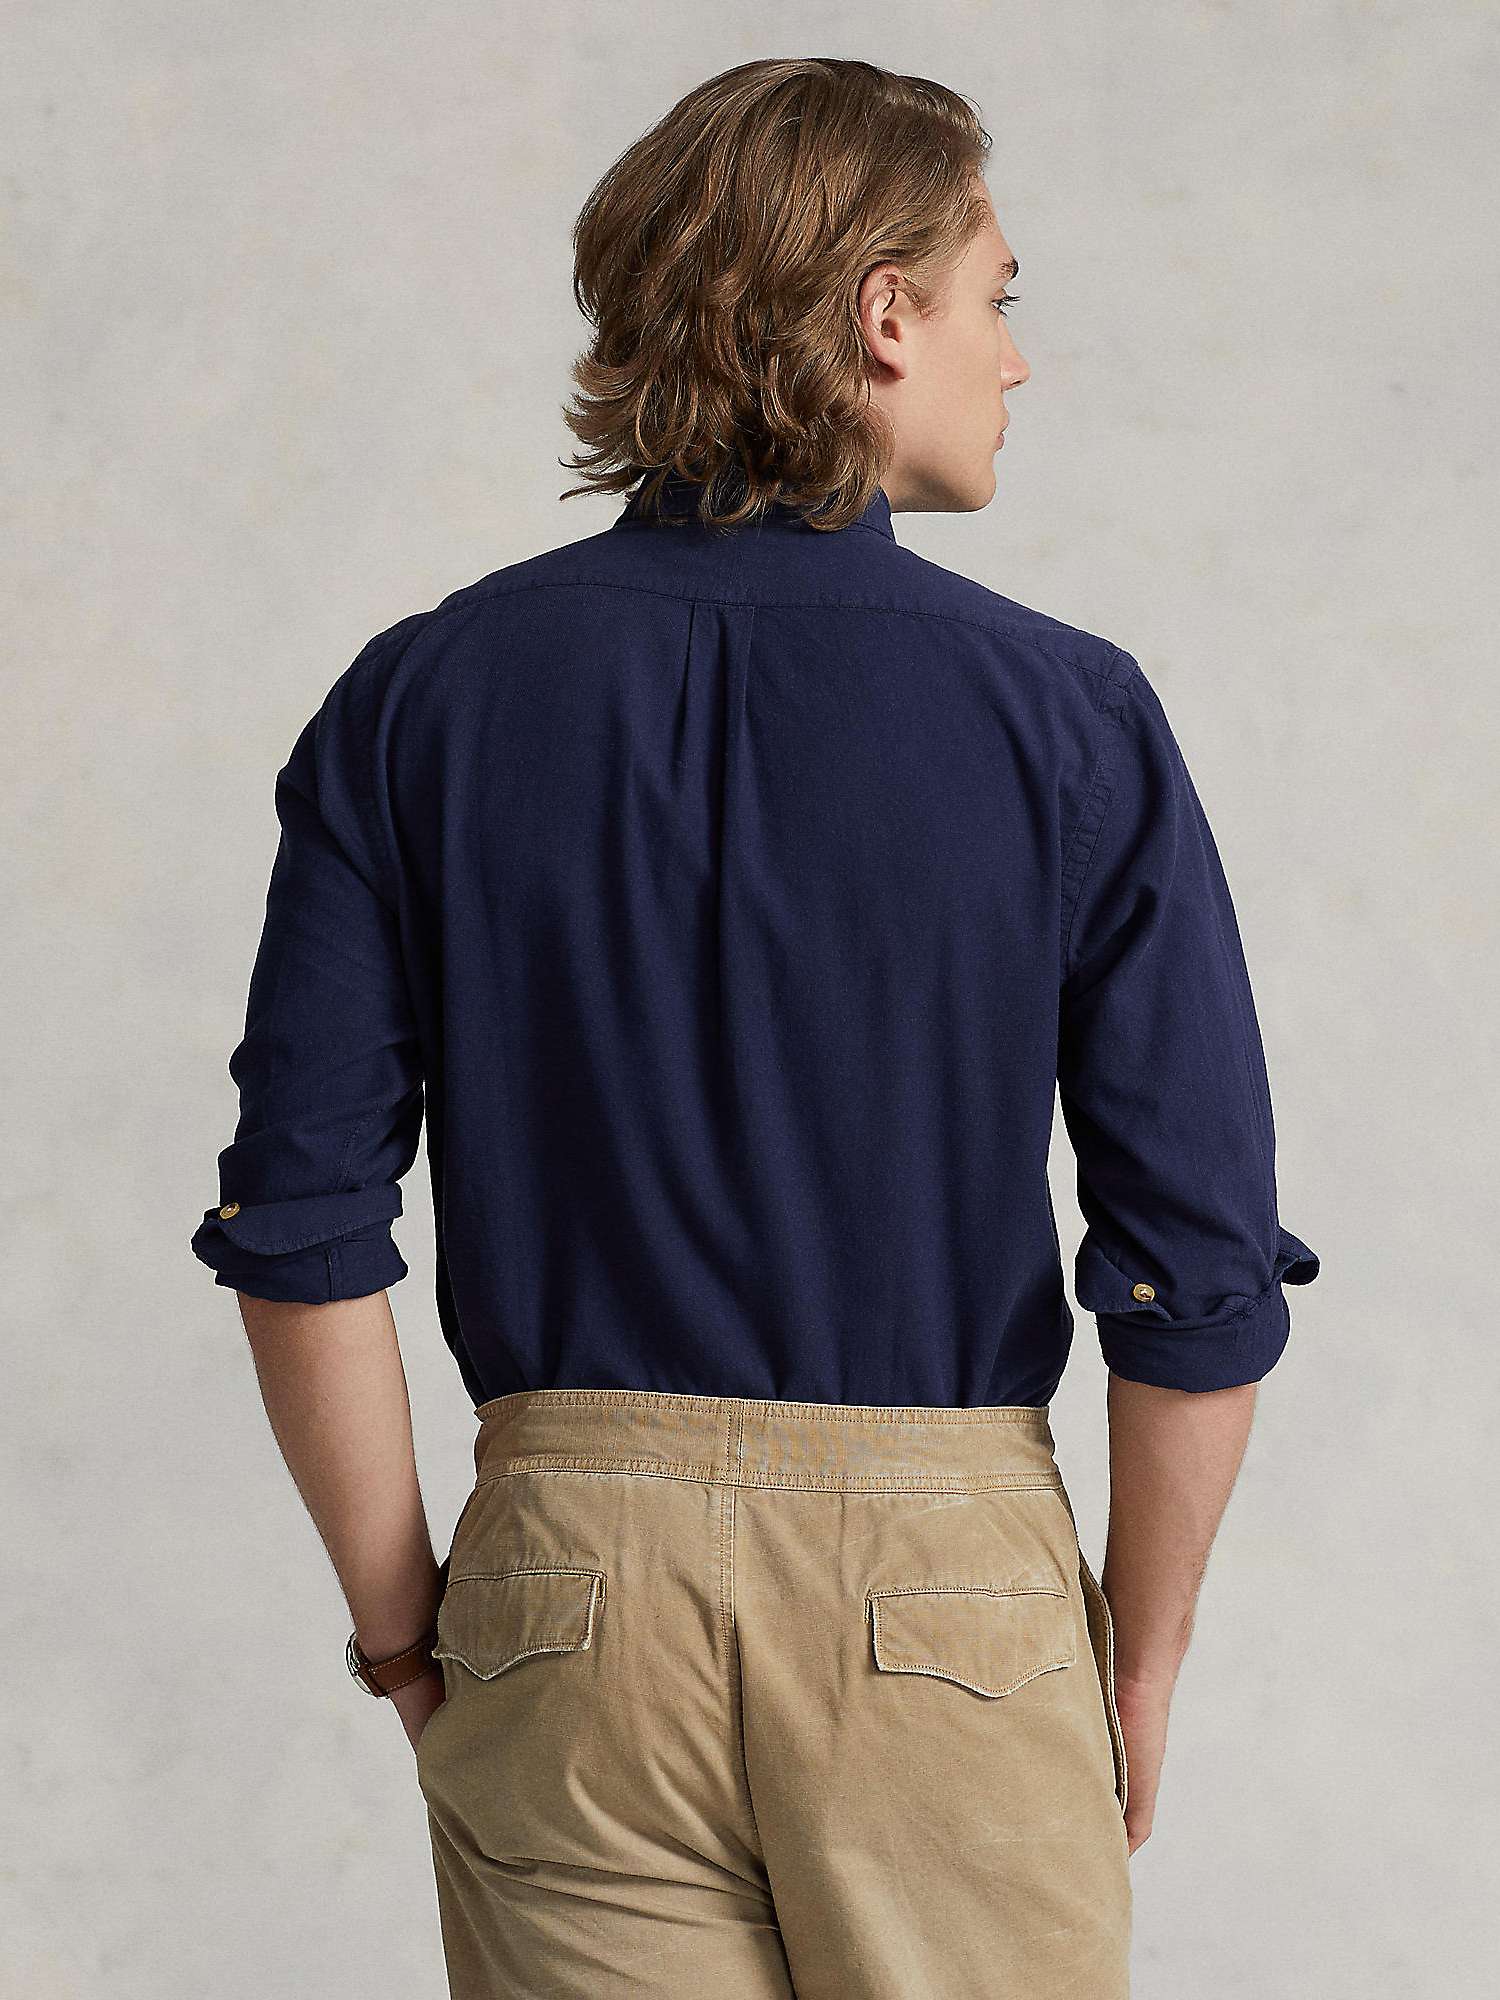 Buy Polo Ralph Lauren Cotton Oxford Slim Fit Shirt Online at johnlewis.com